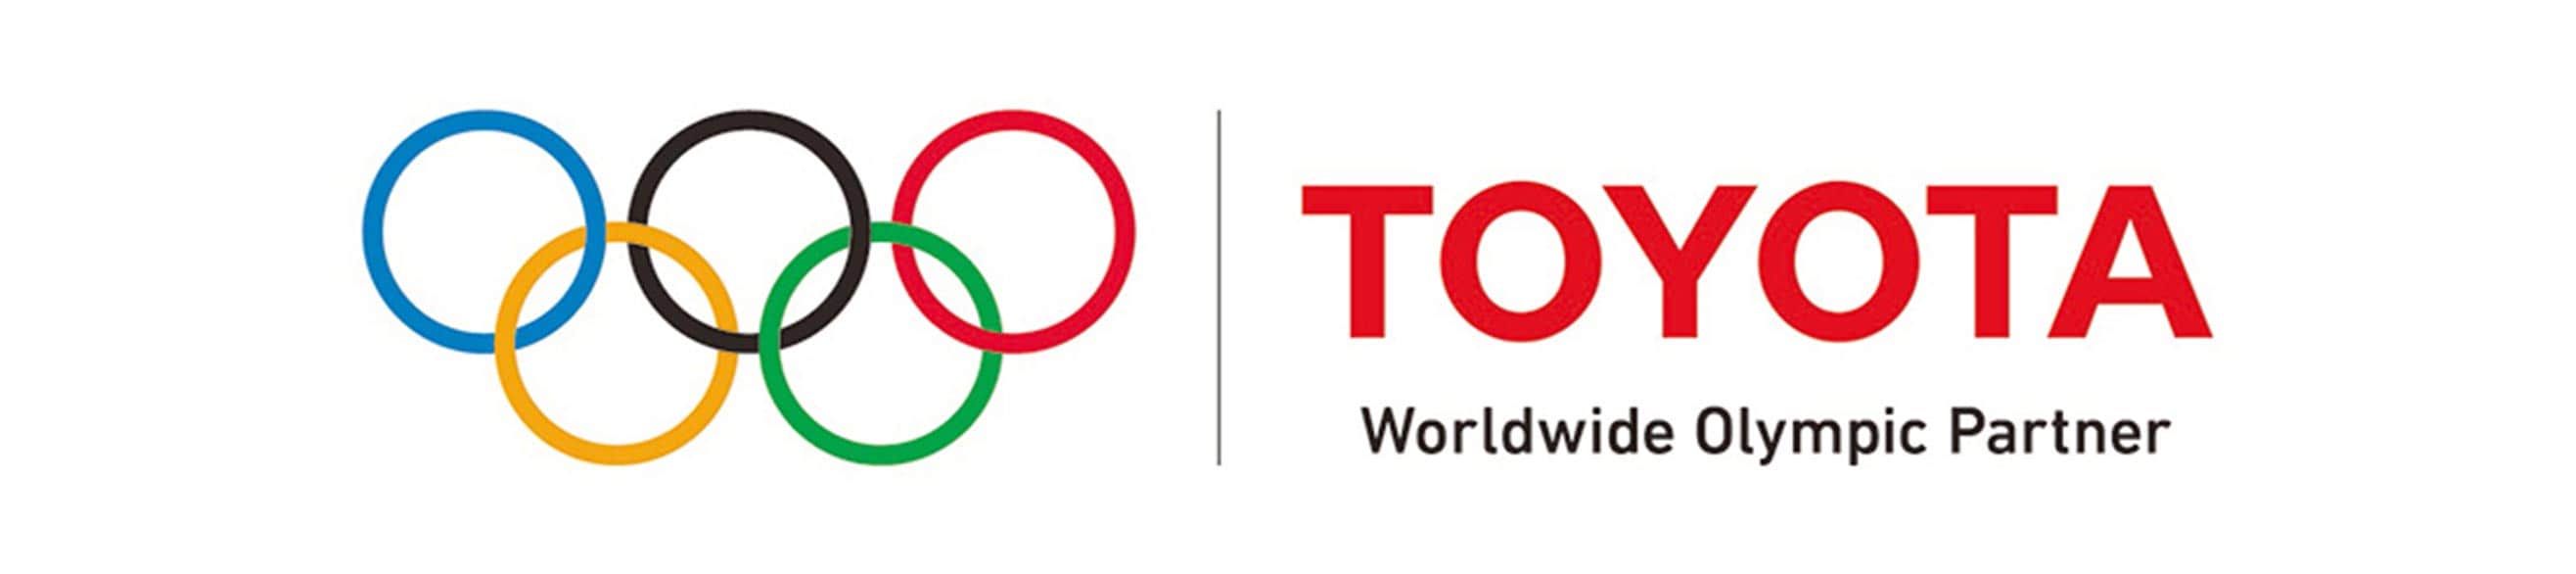 Toyota Official Partner Olympic Sponsors IOC